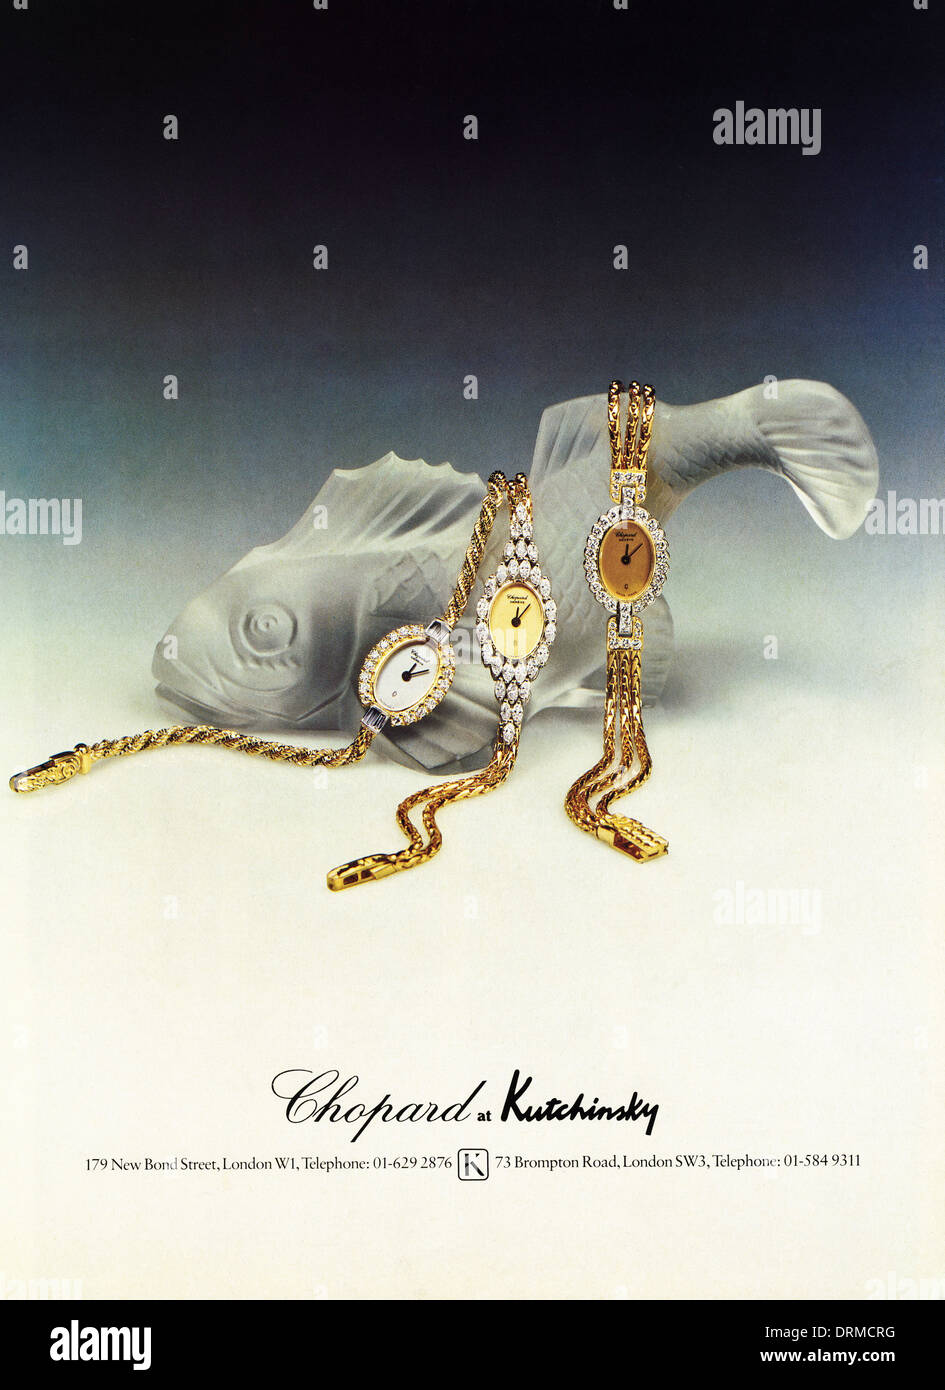 1980s fashion magazine advertisement advertising luxury watches by CHOPARD & KUTCHINSKY of London, advert circa 1983 Stock Photo